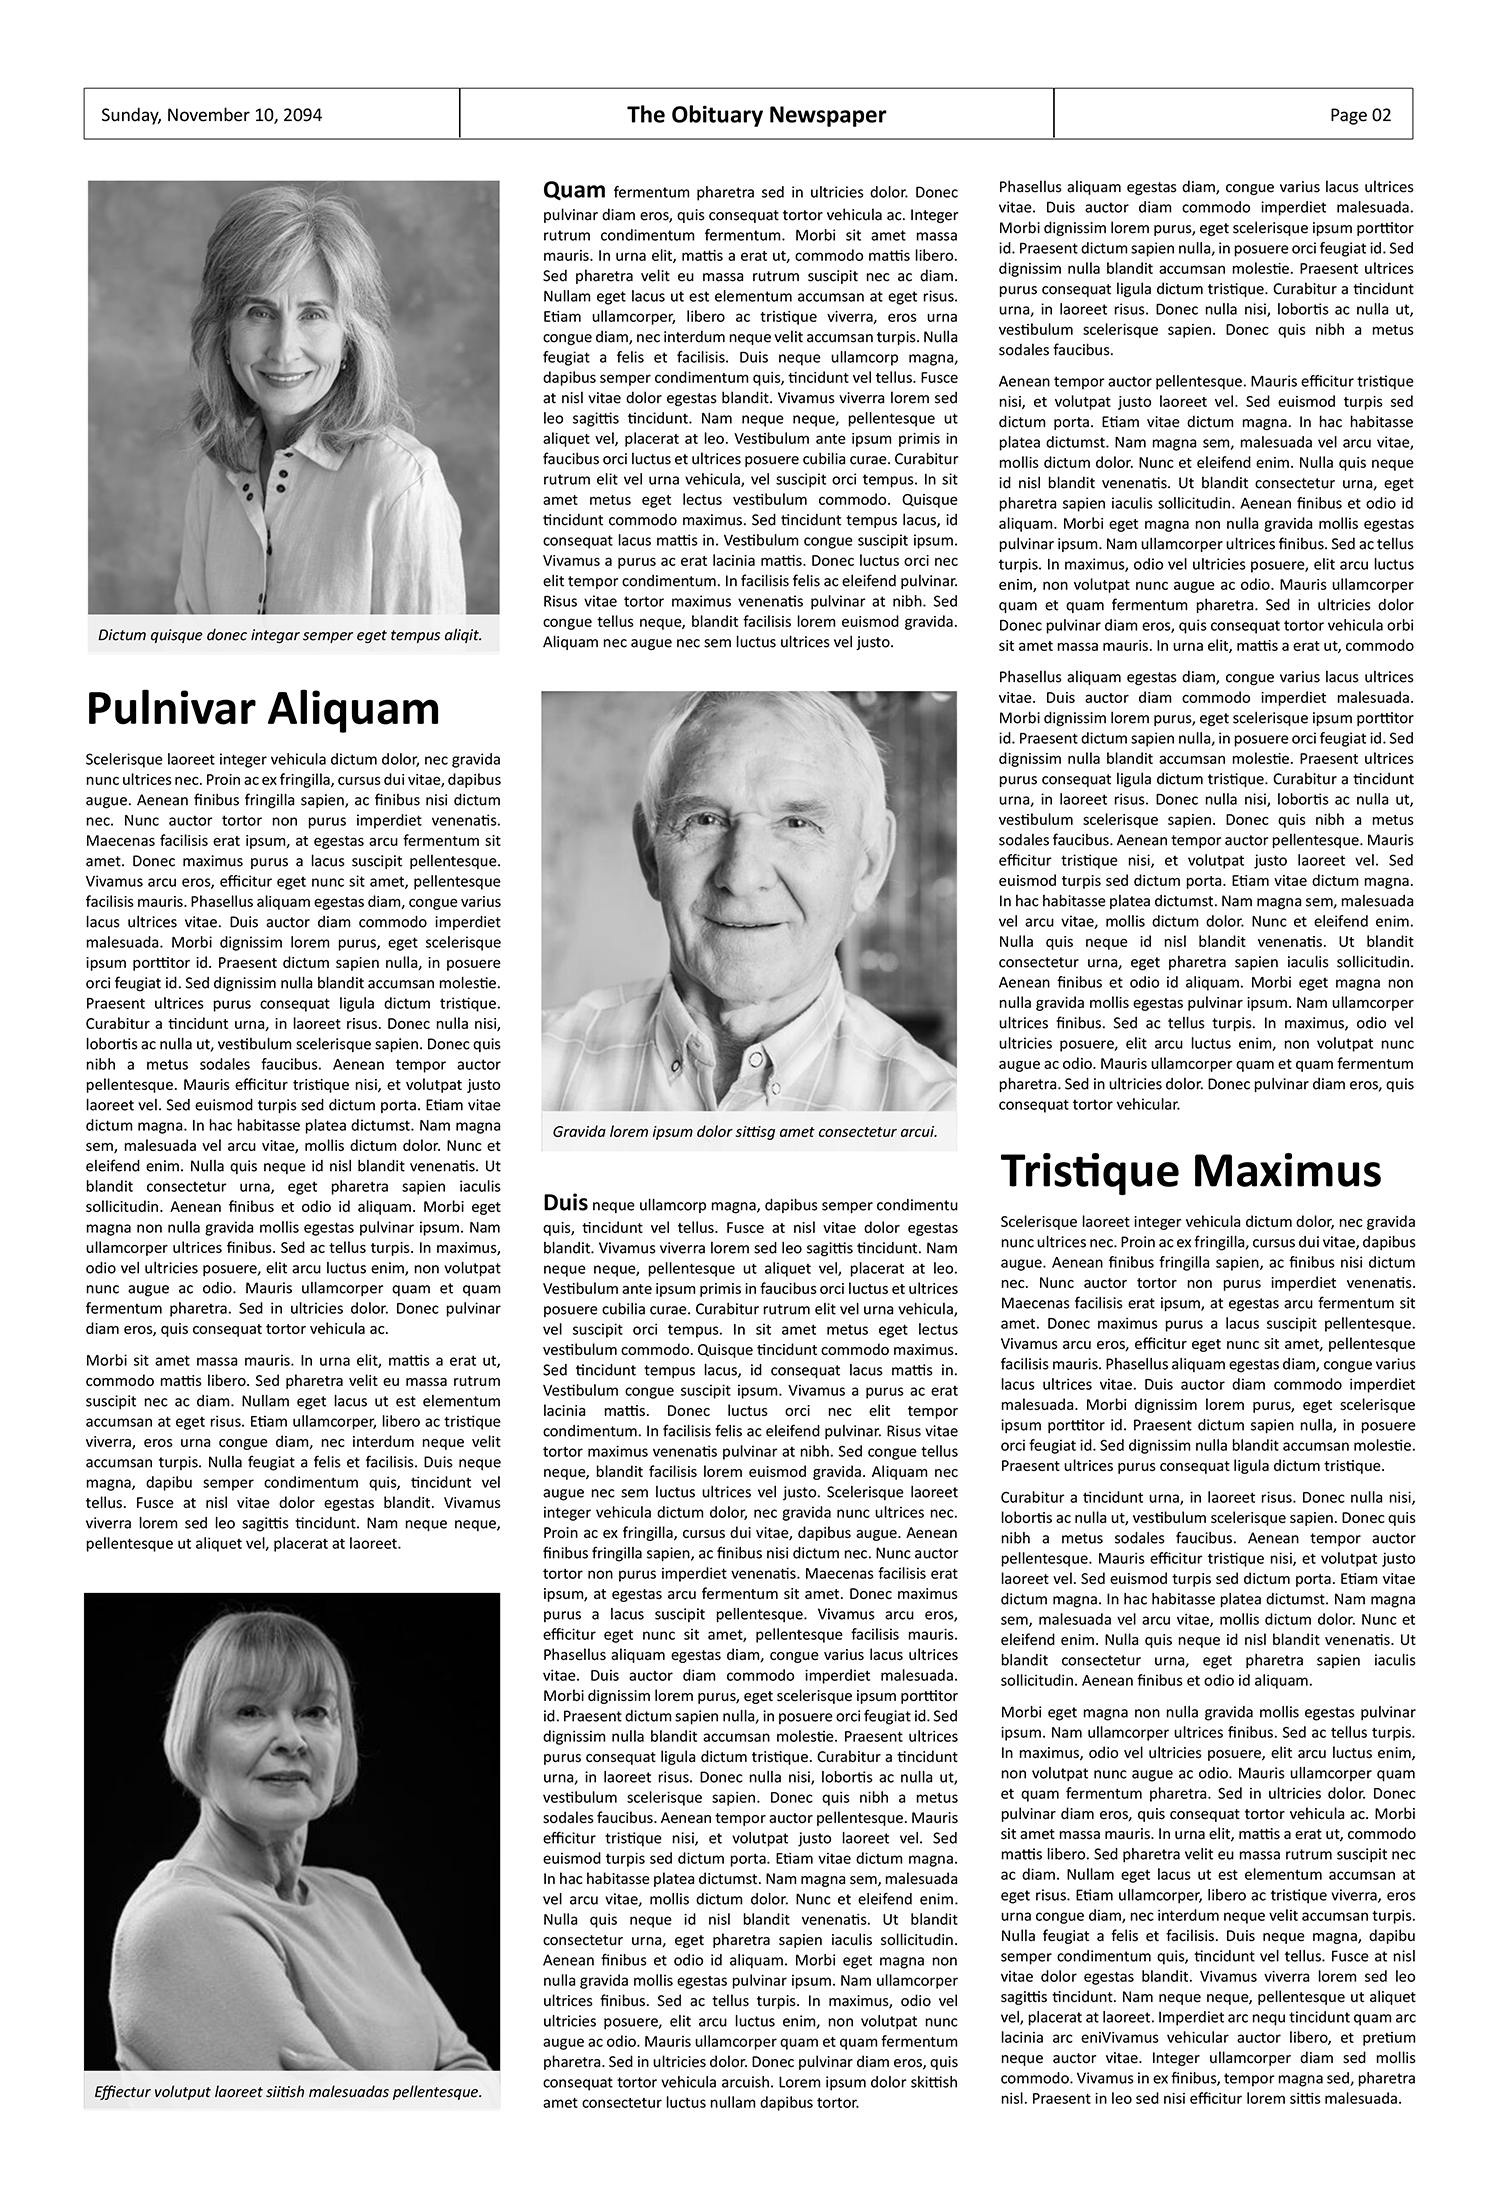 Broadsheet Newspaper Obituary Page Template - Page 02